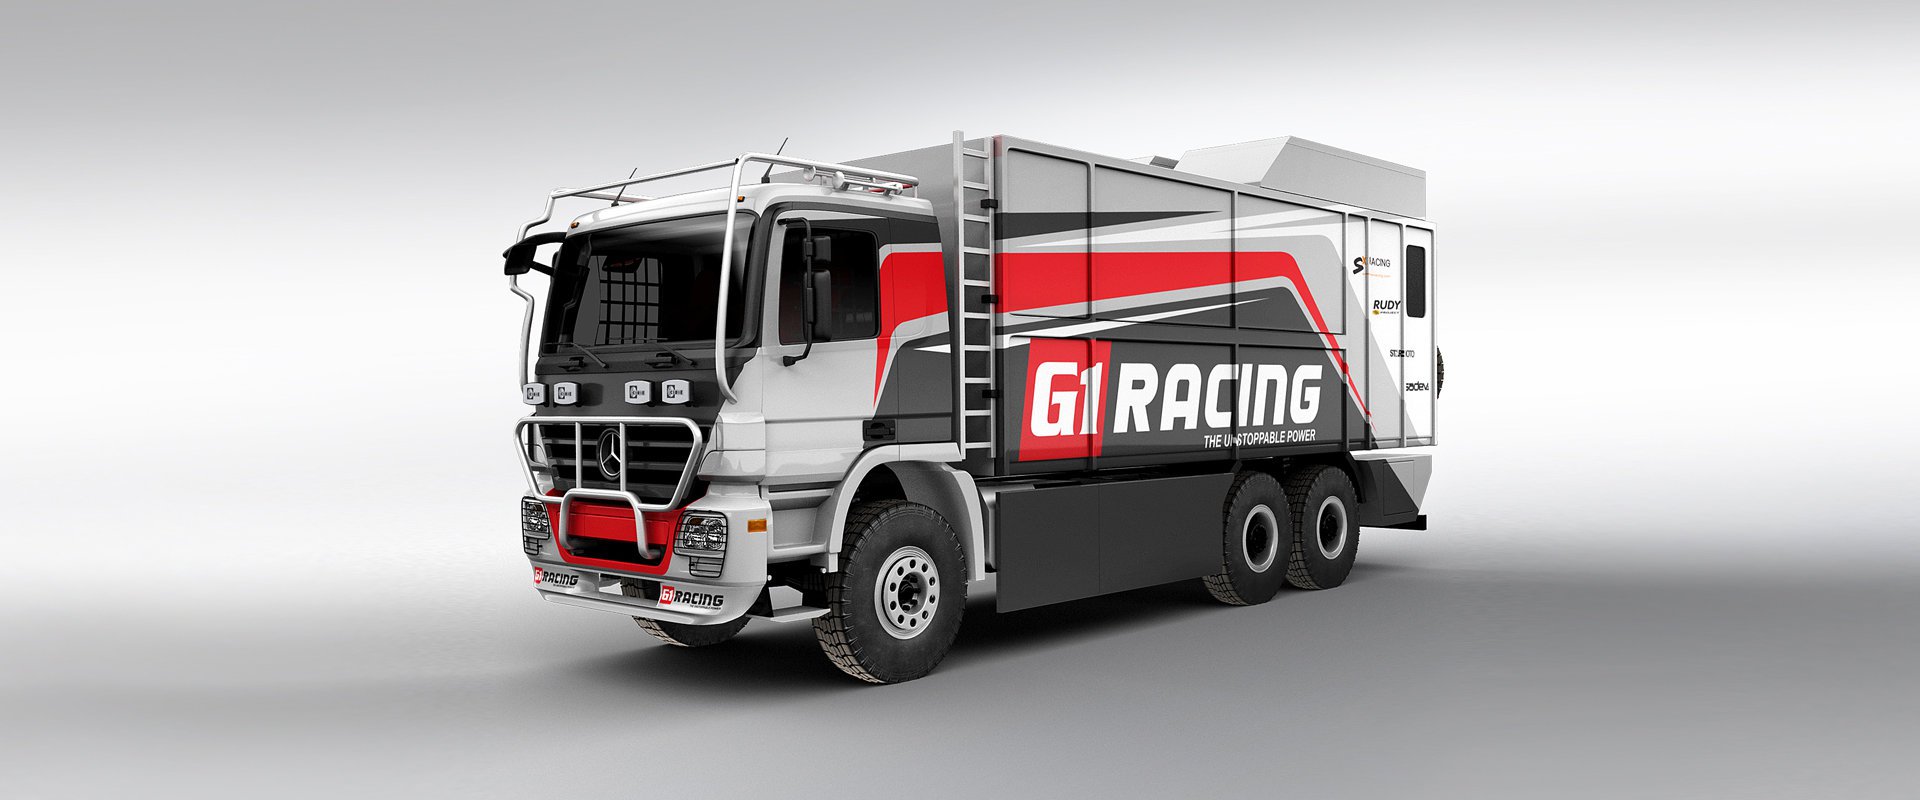 G1 Racing #1